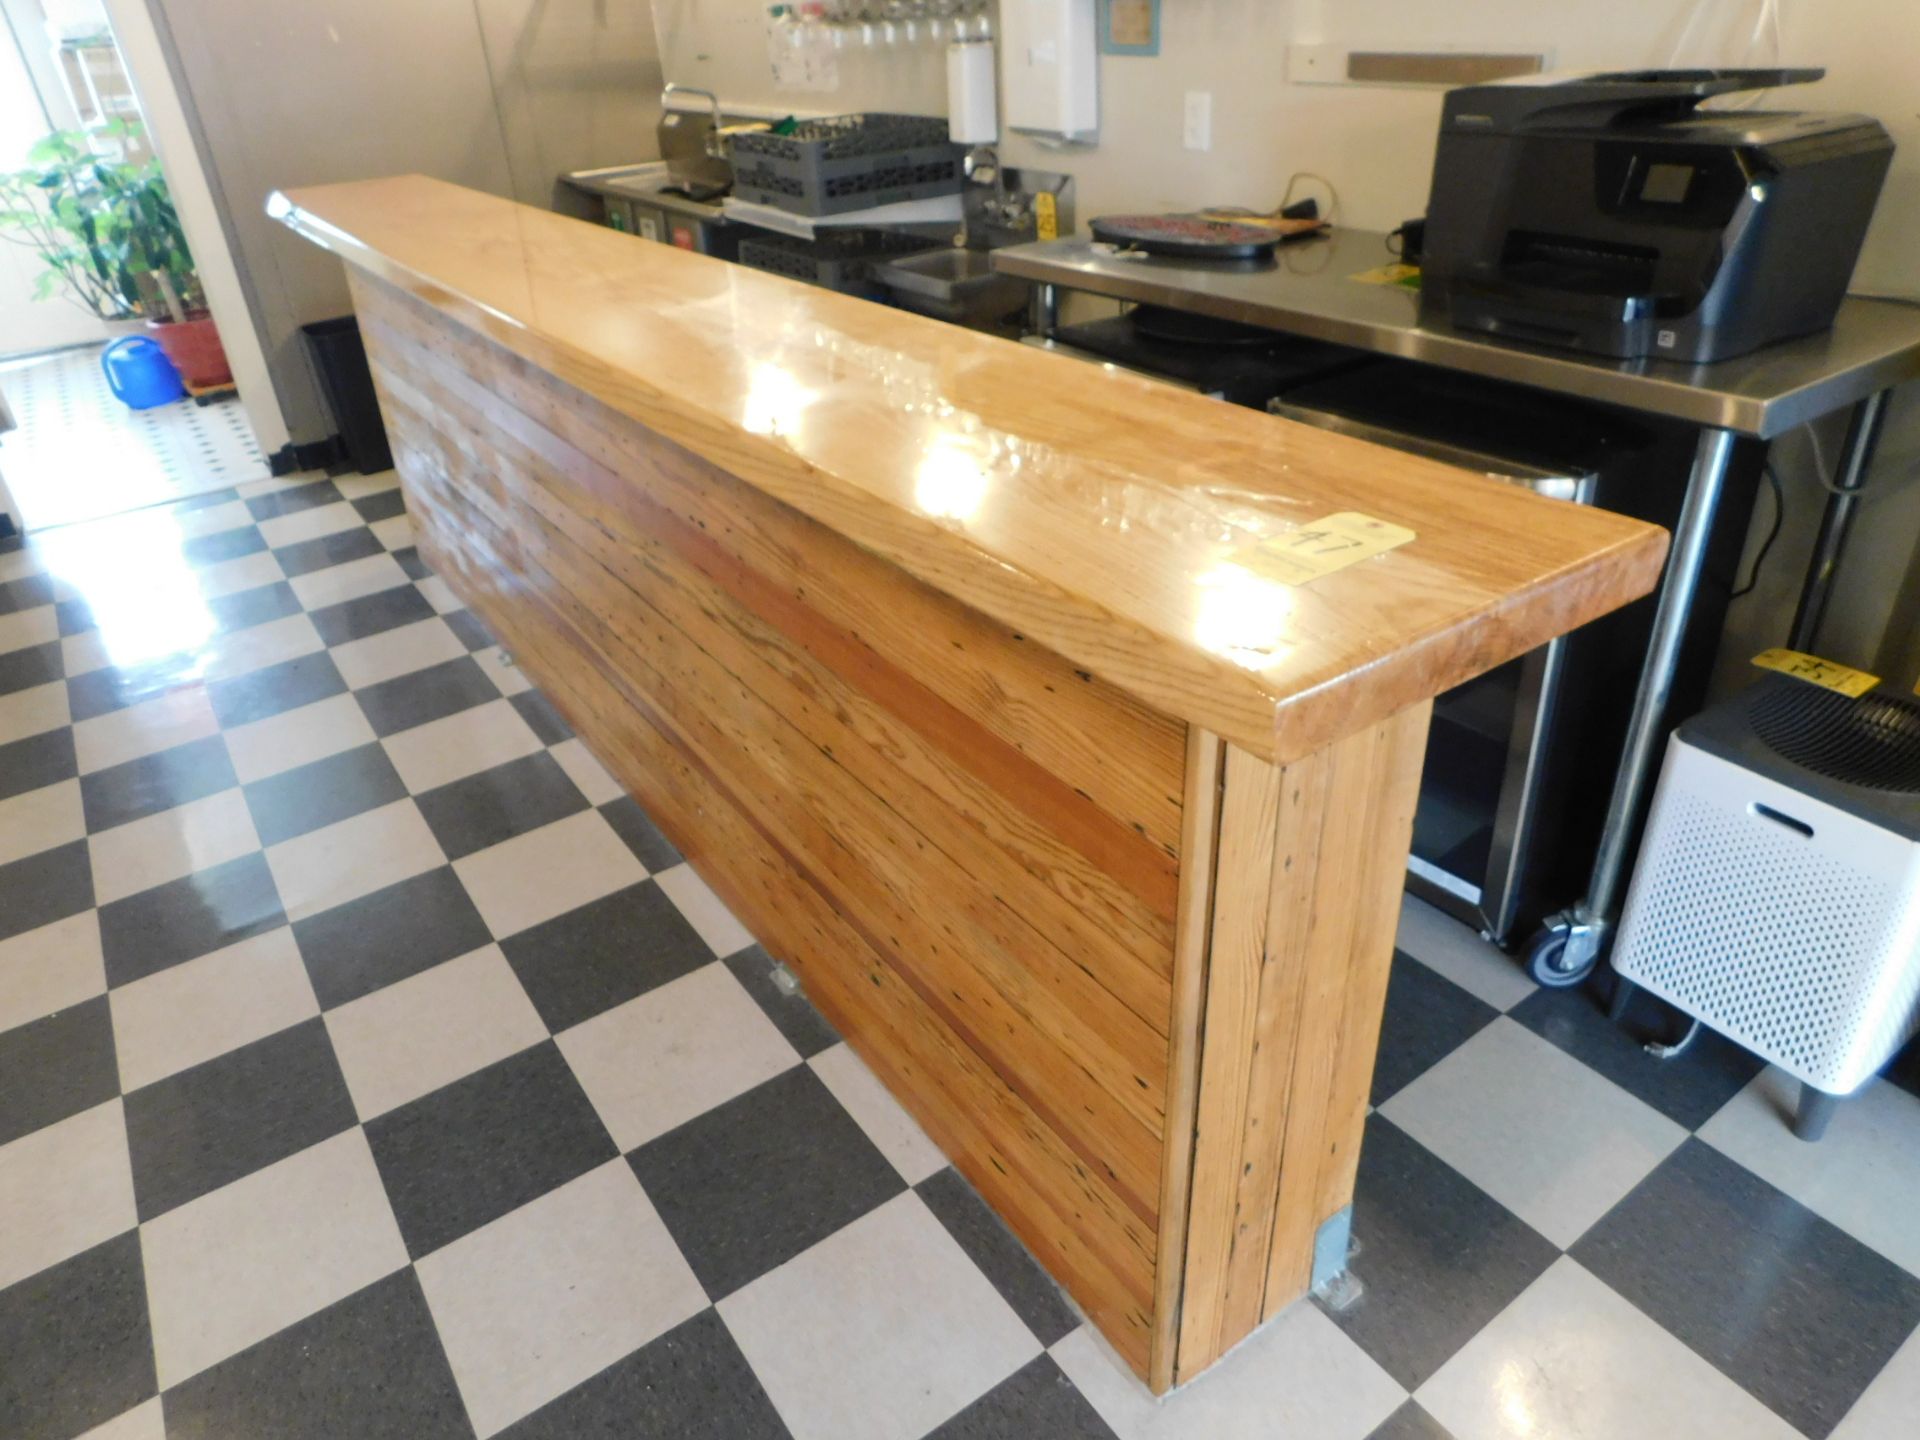 12' Wood Finish Bar, Mill Cut Hardwood Slab, Epoxy Counter Top, Wood Plank Sides, 12' L x 17" W x - Image 3 of 7